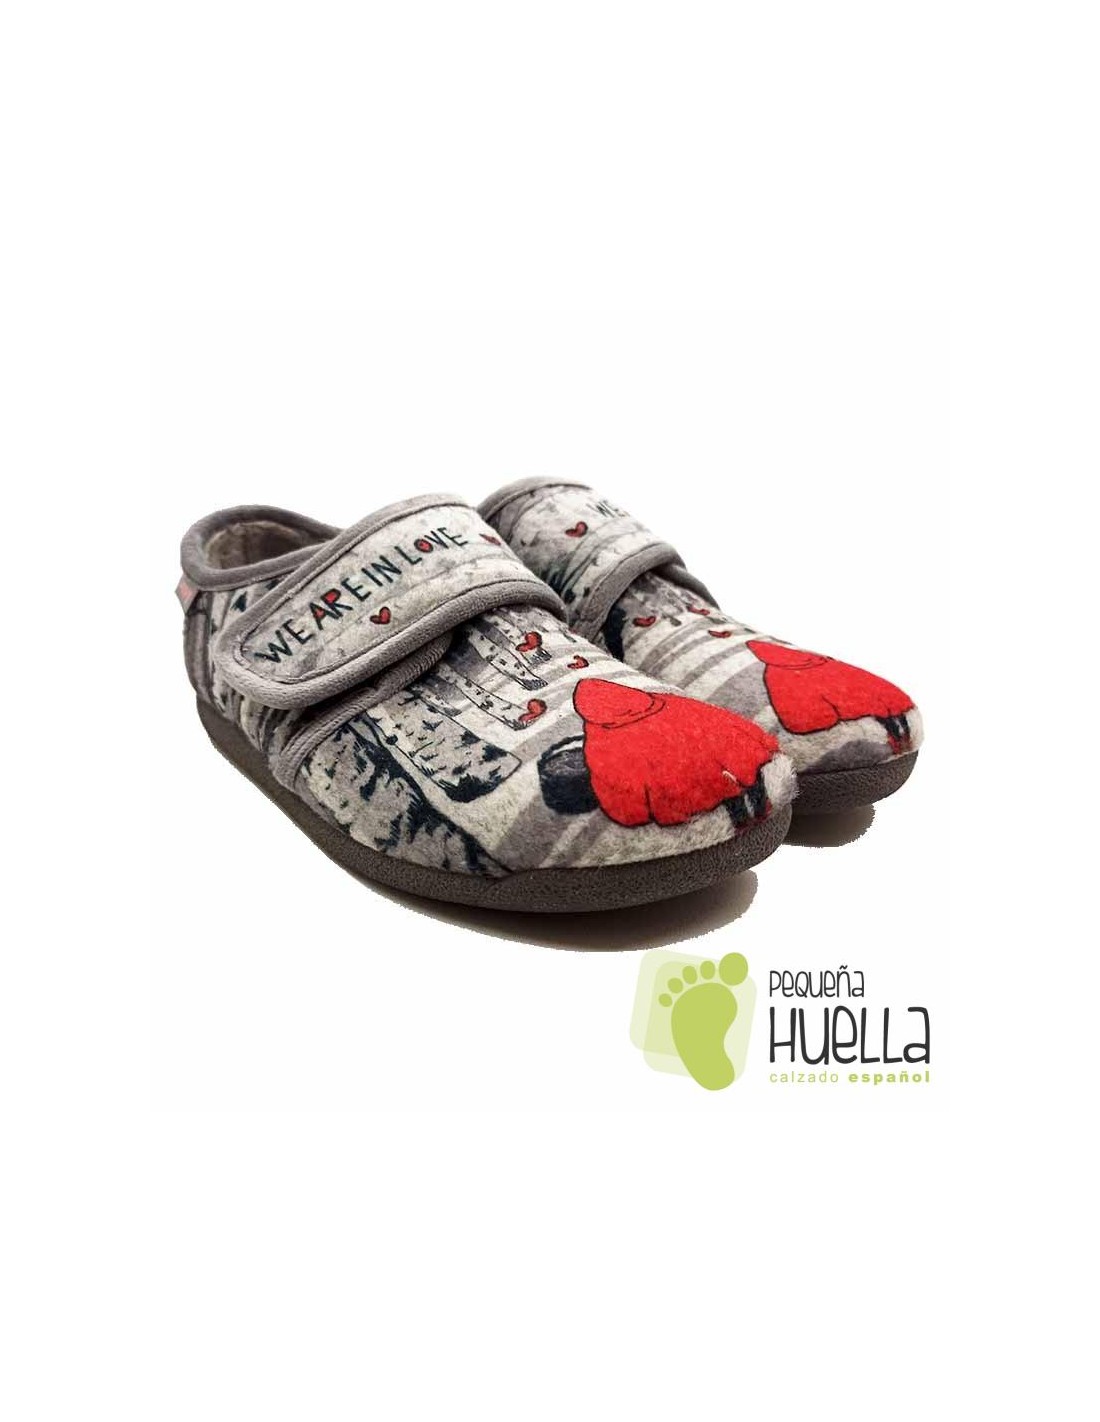 Comprar zapatillas de casa de Inverno con Caperucita Roja para niñas ZAPY